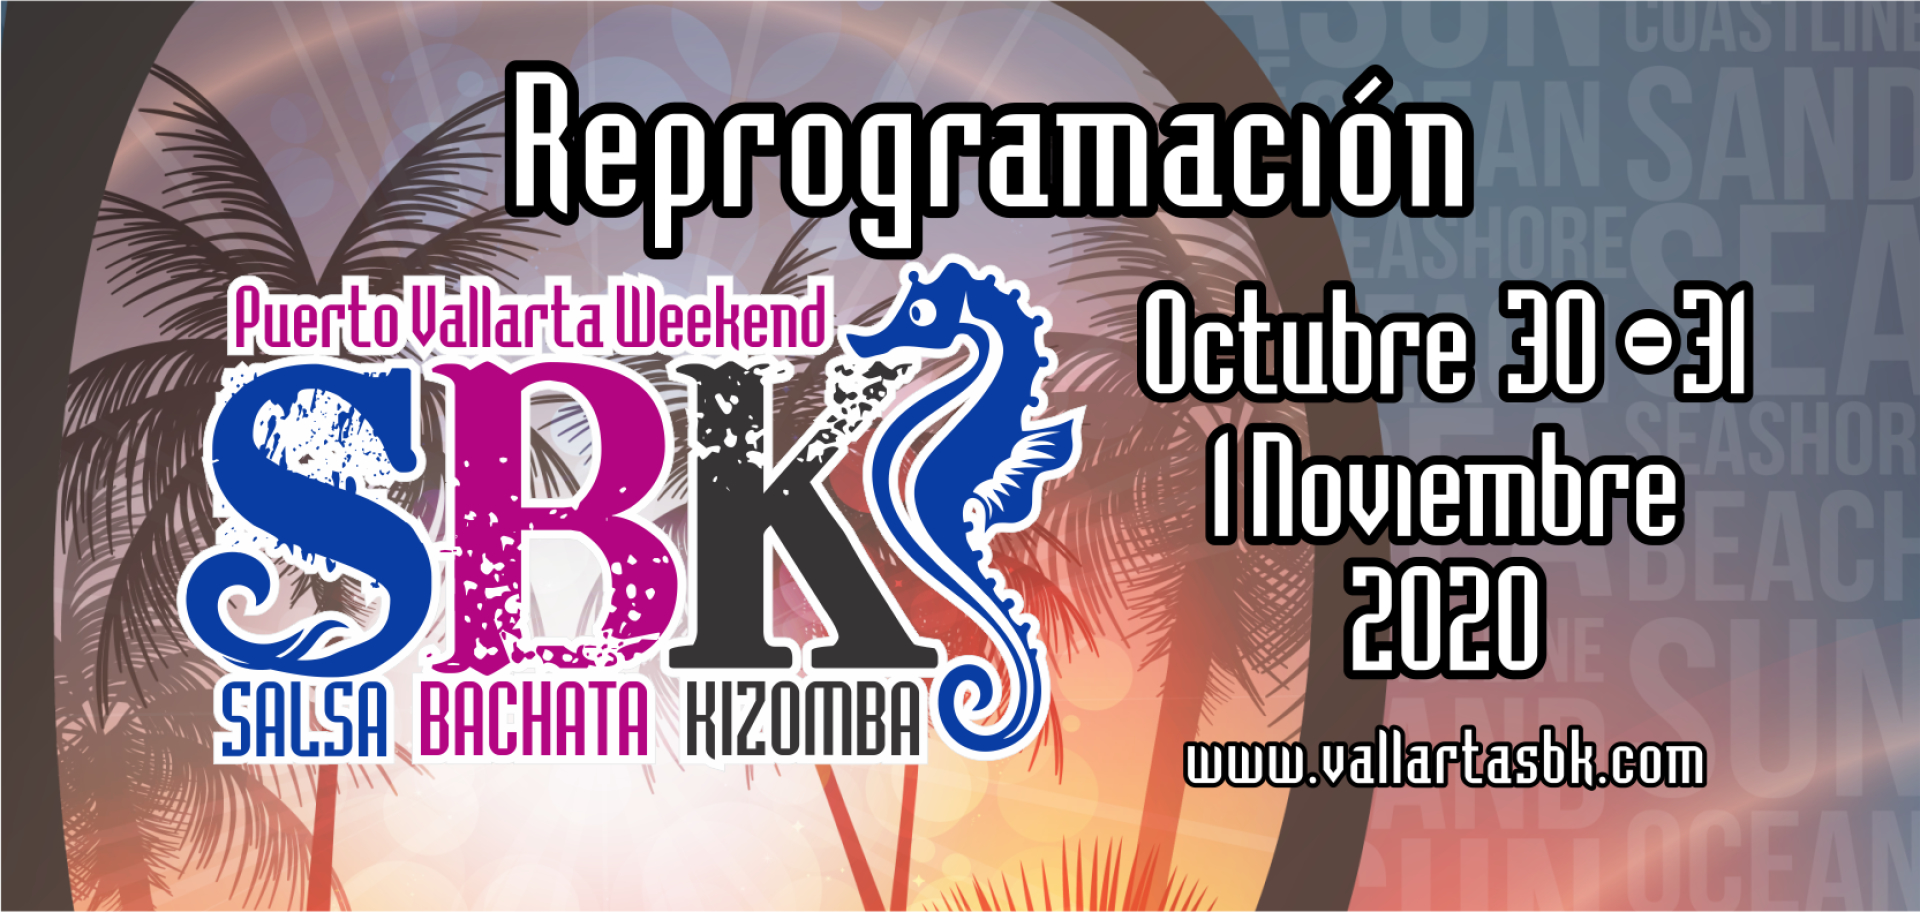 Vallarta SBK Festival 2020 go&dance